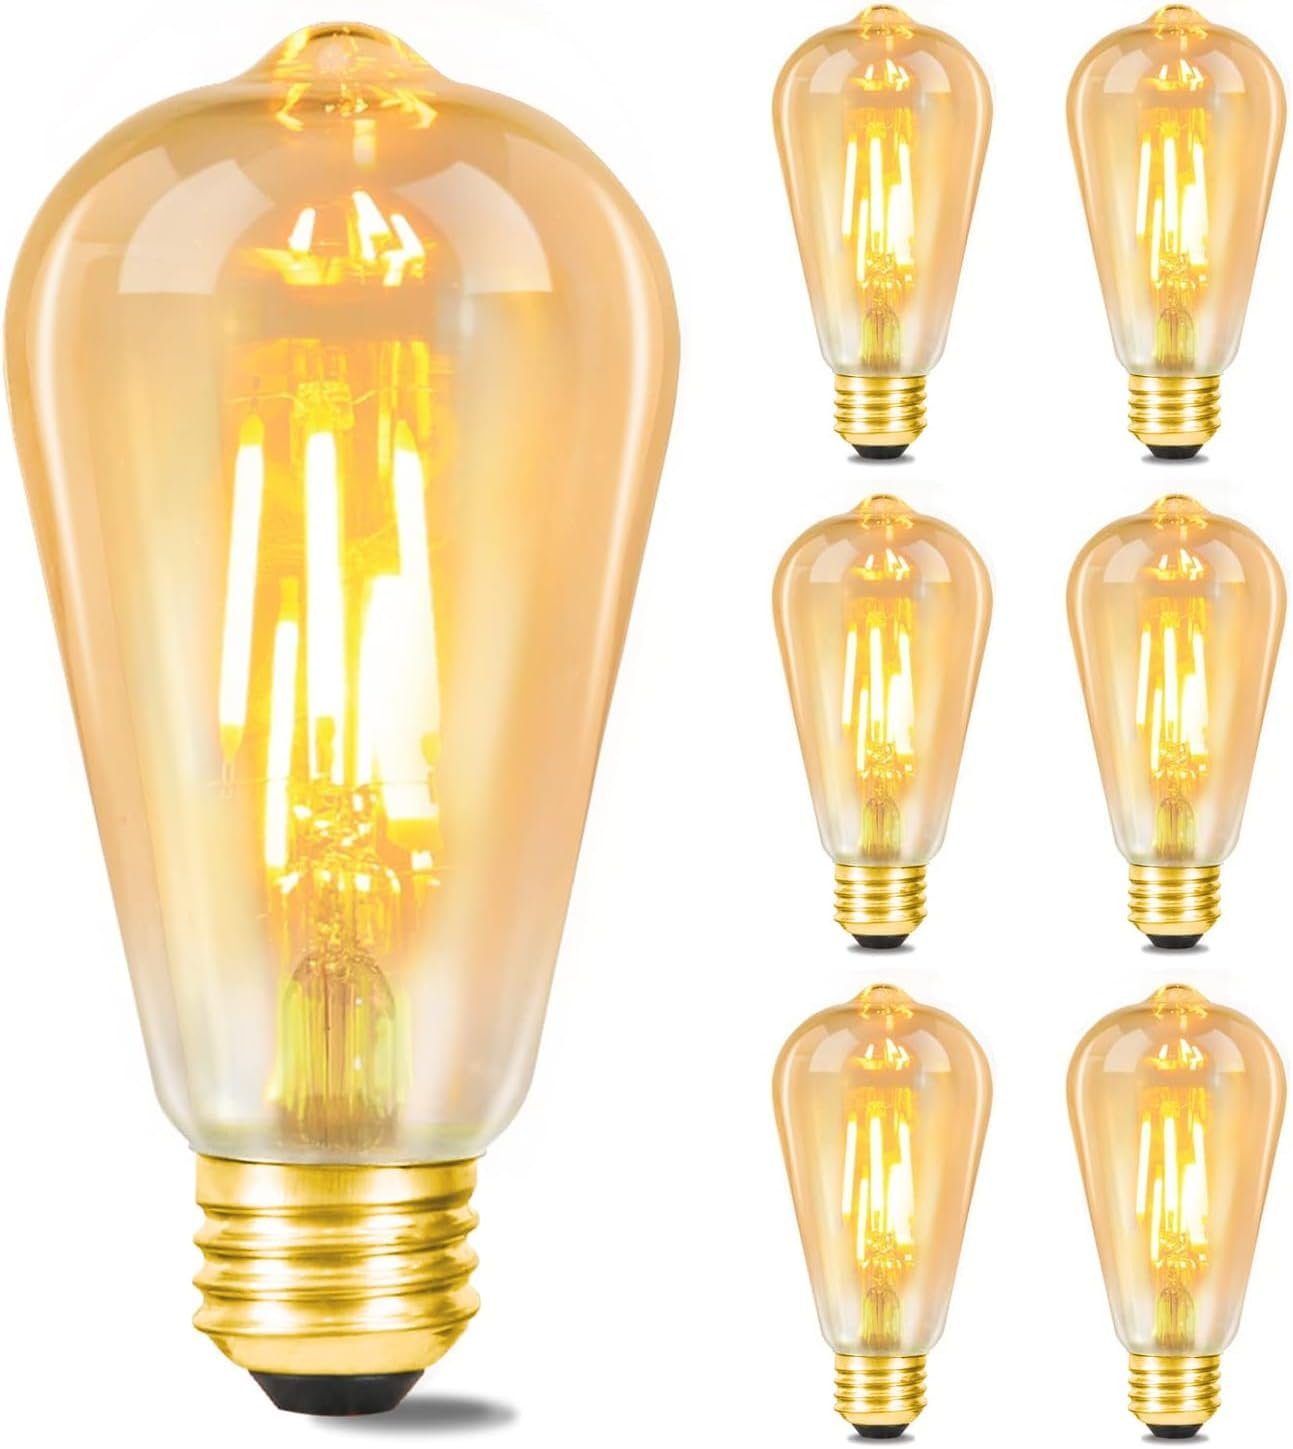 Nettlife LED-Leuchtmittel 6er LED Retro Glühlampe E27 Edison Glühbirne 4W  Antike LED Filament, E27, 6 St., Warmweiß, für Nostalgie & Retro  Beleuchtung im Haus Café Restaurant